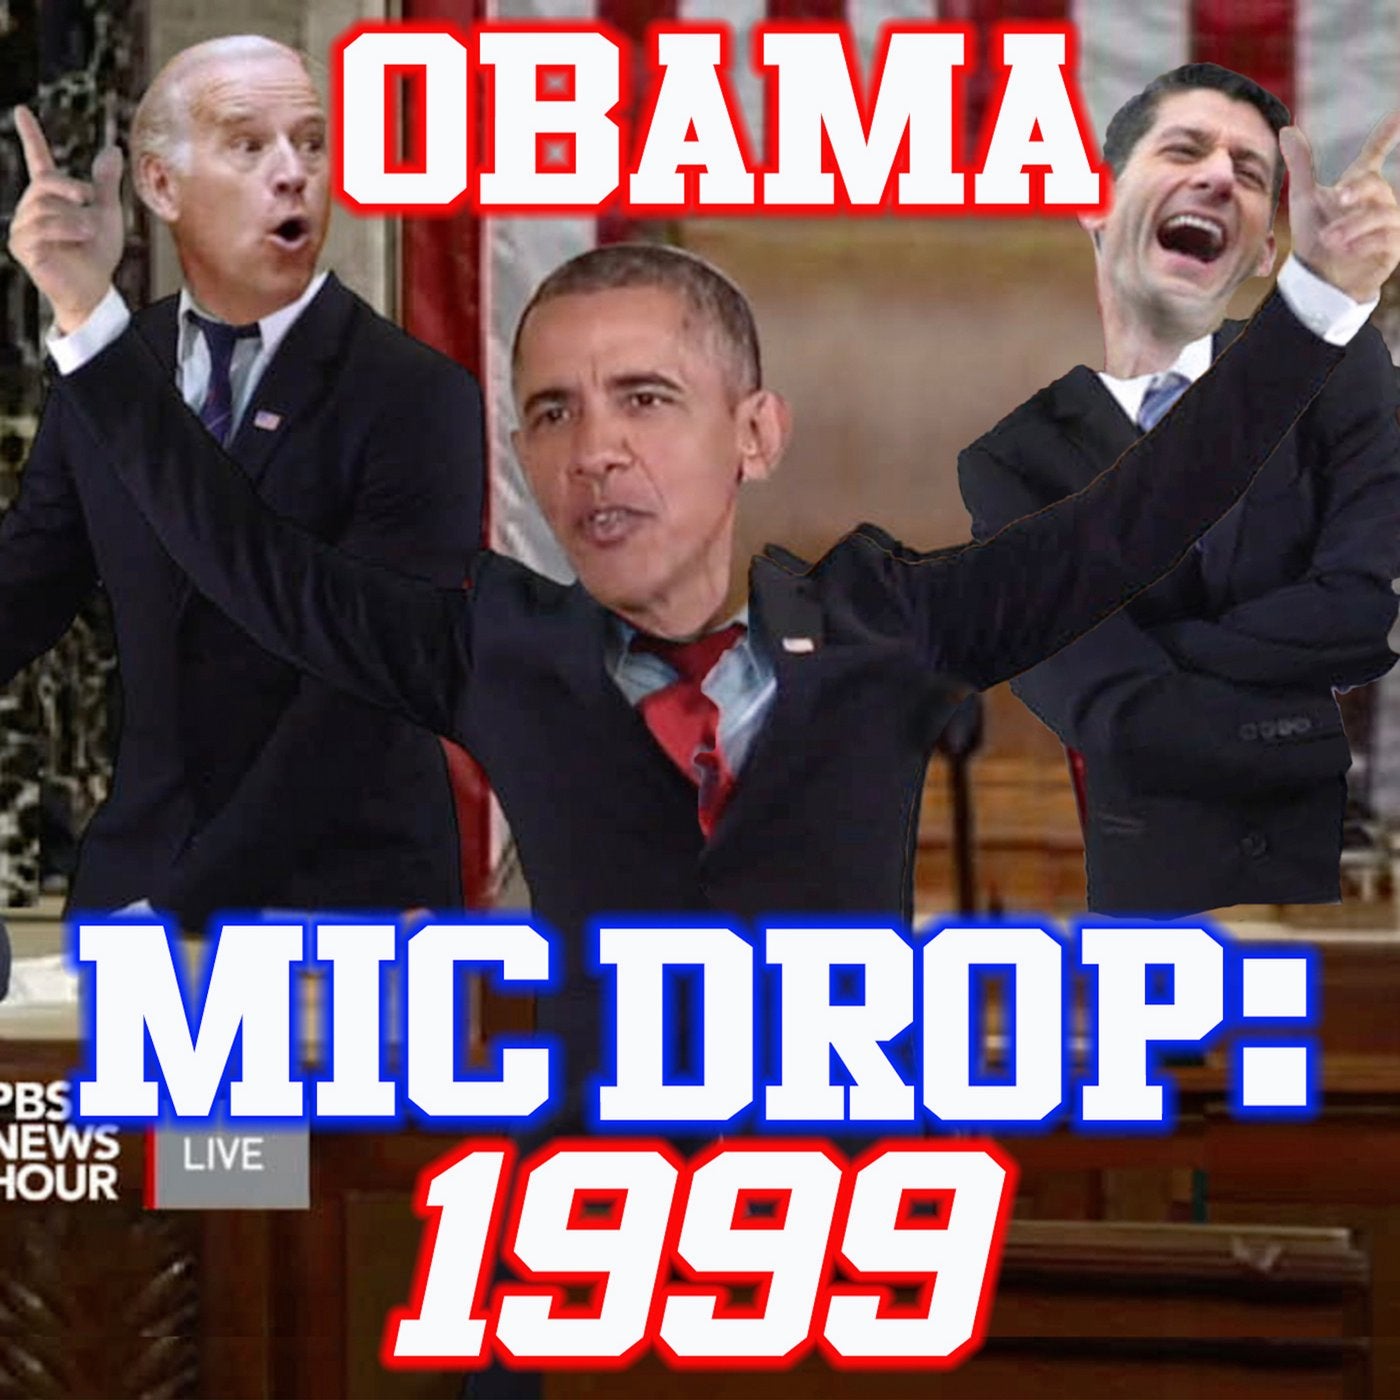 Obama Mic Drop (1999)